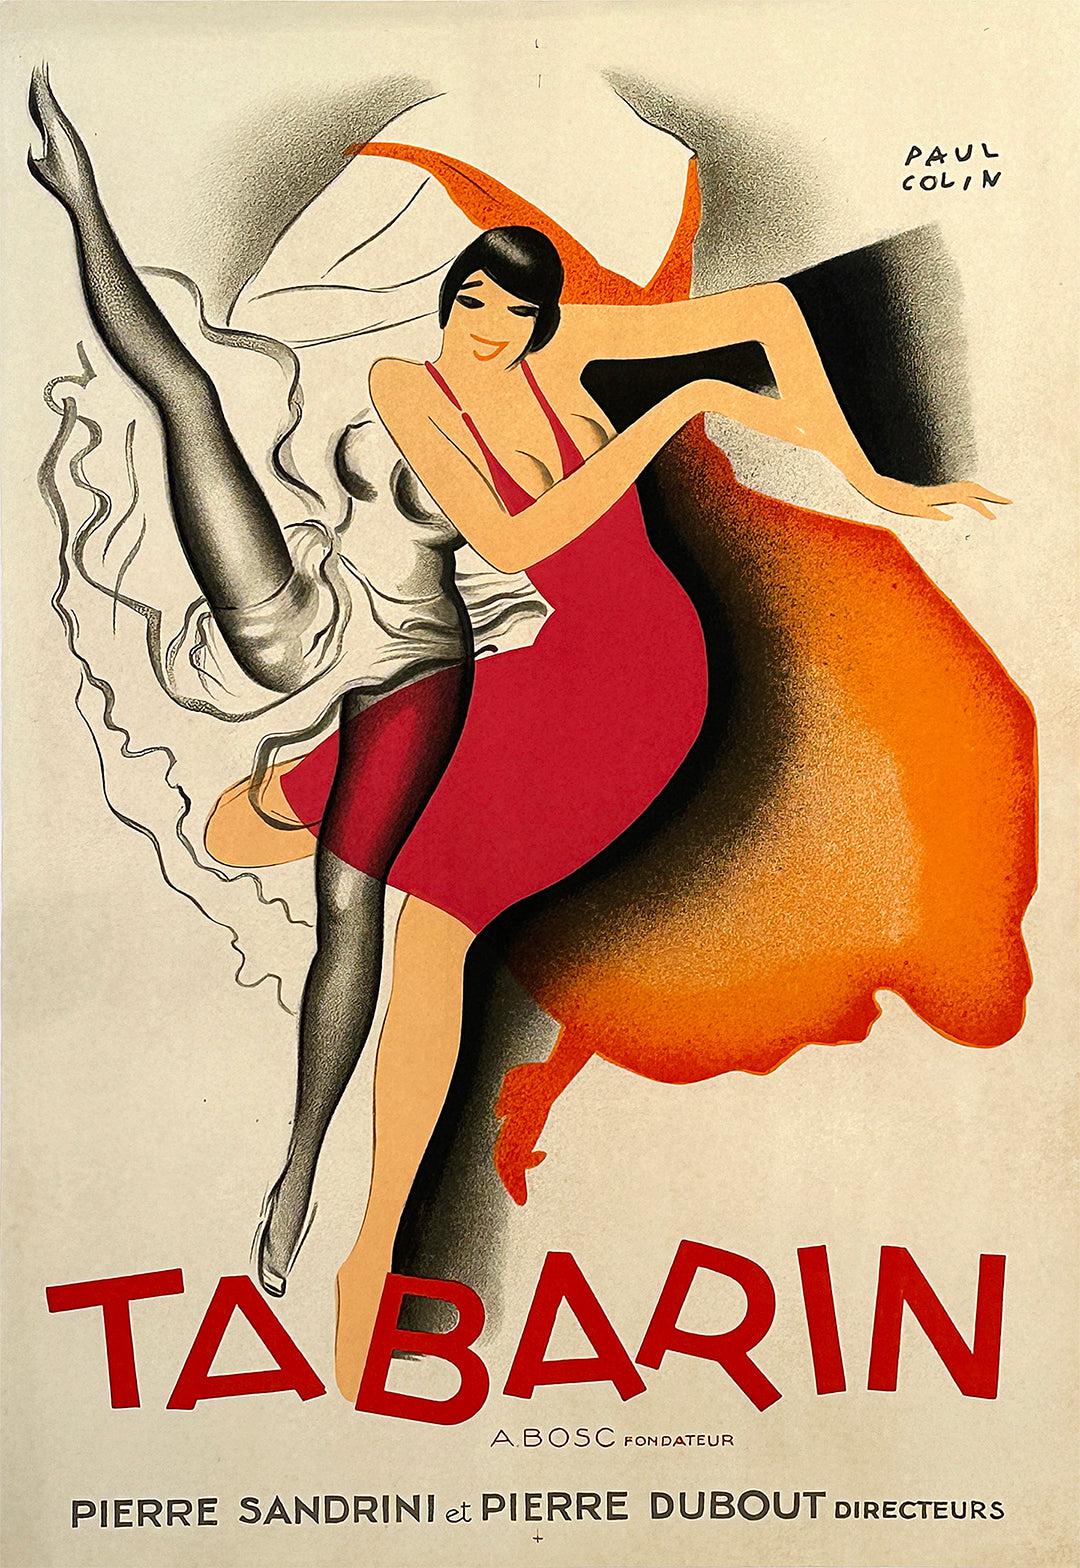 Original Rare Bal Tabarin Poster by Paul Colin 1928 Art Deco Jazz Age